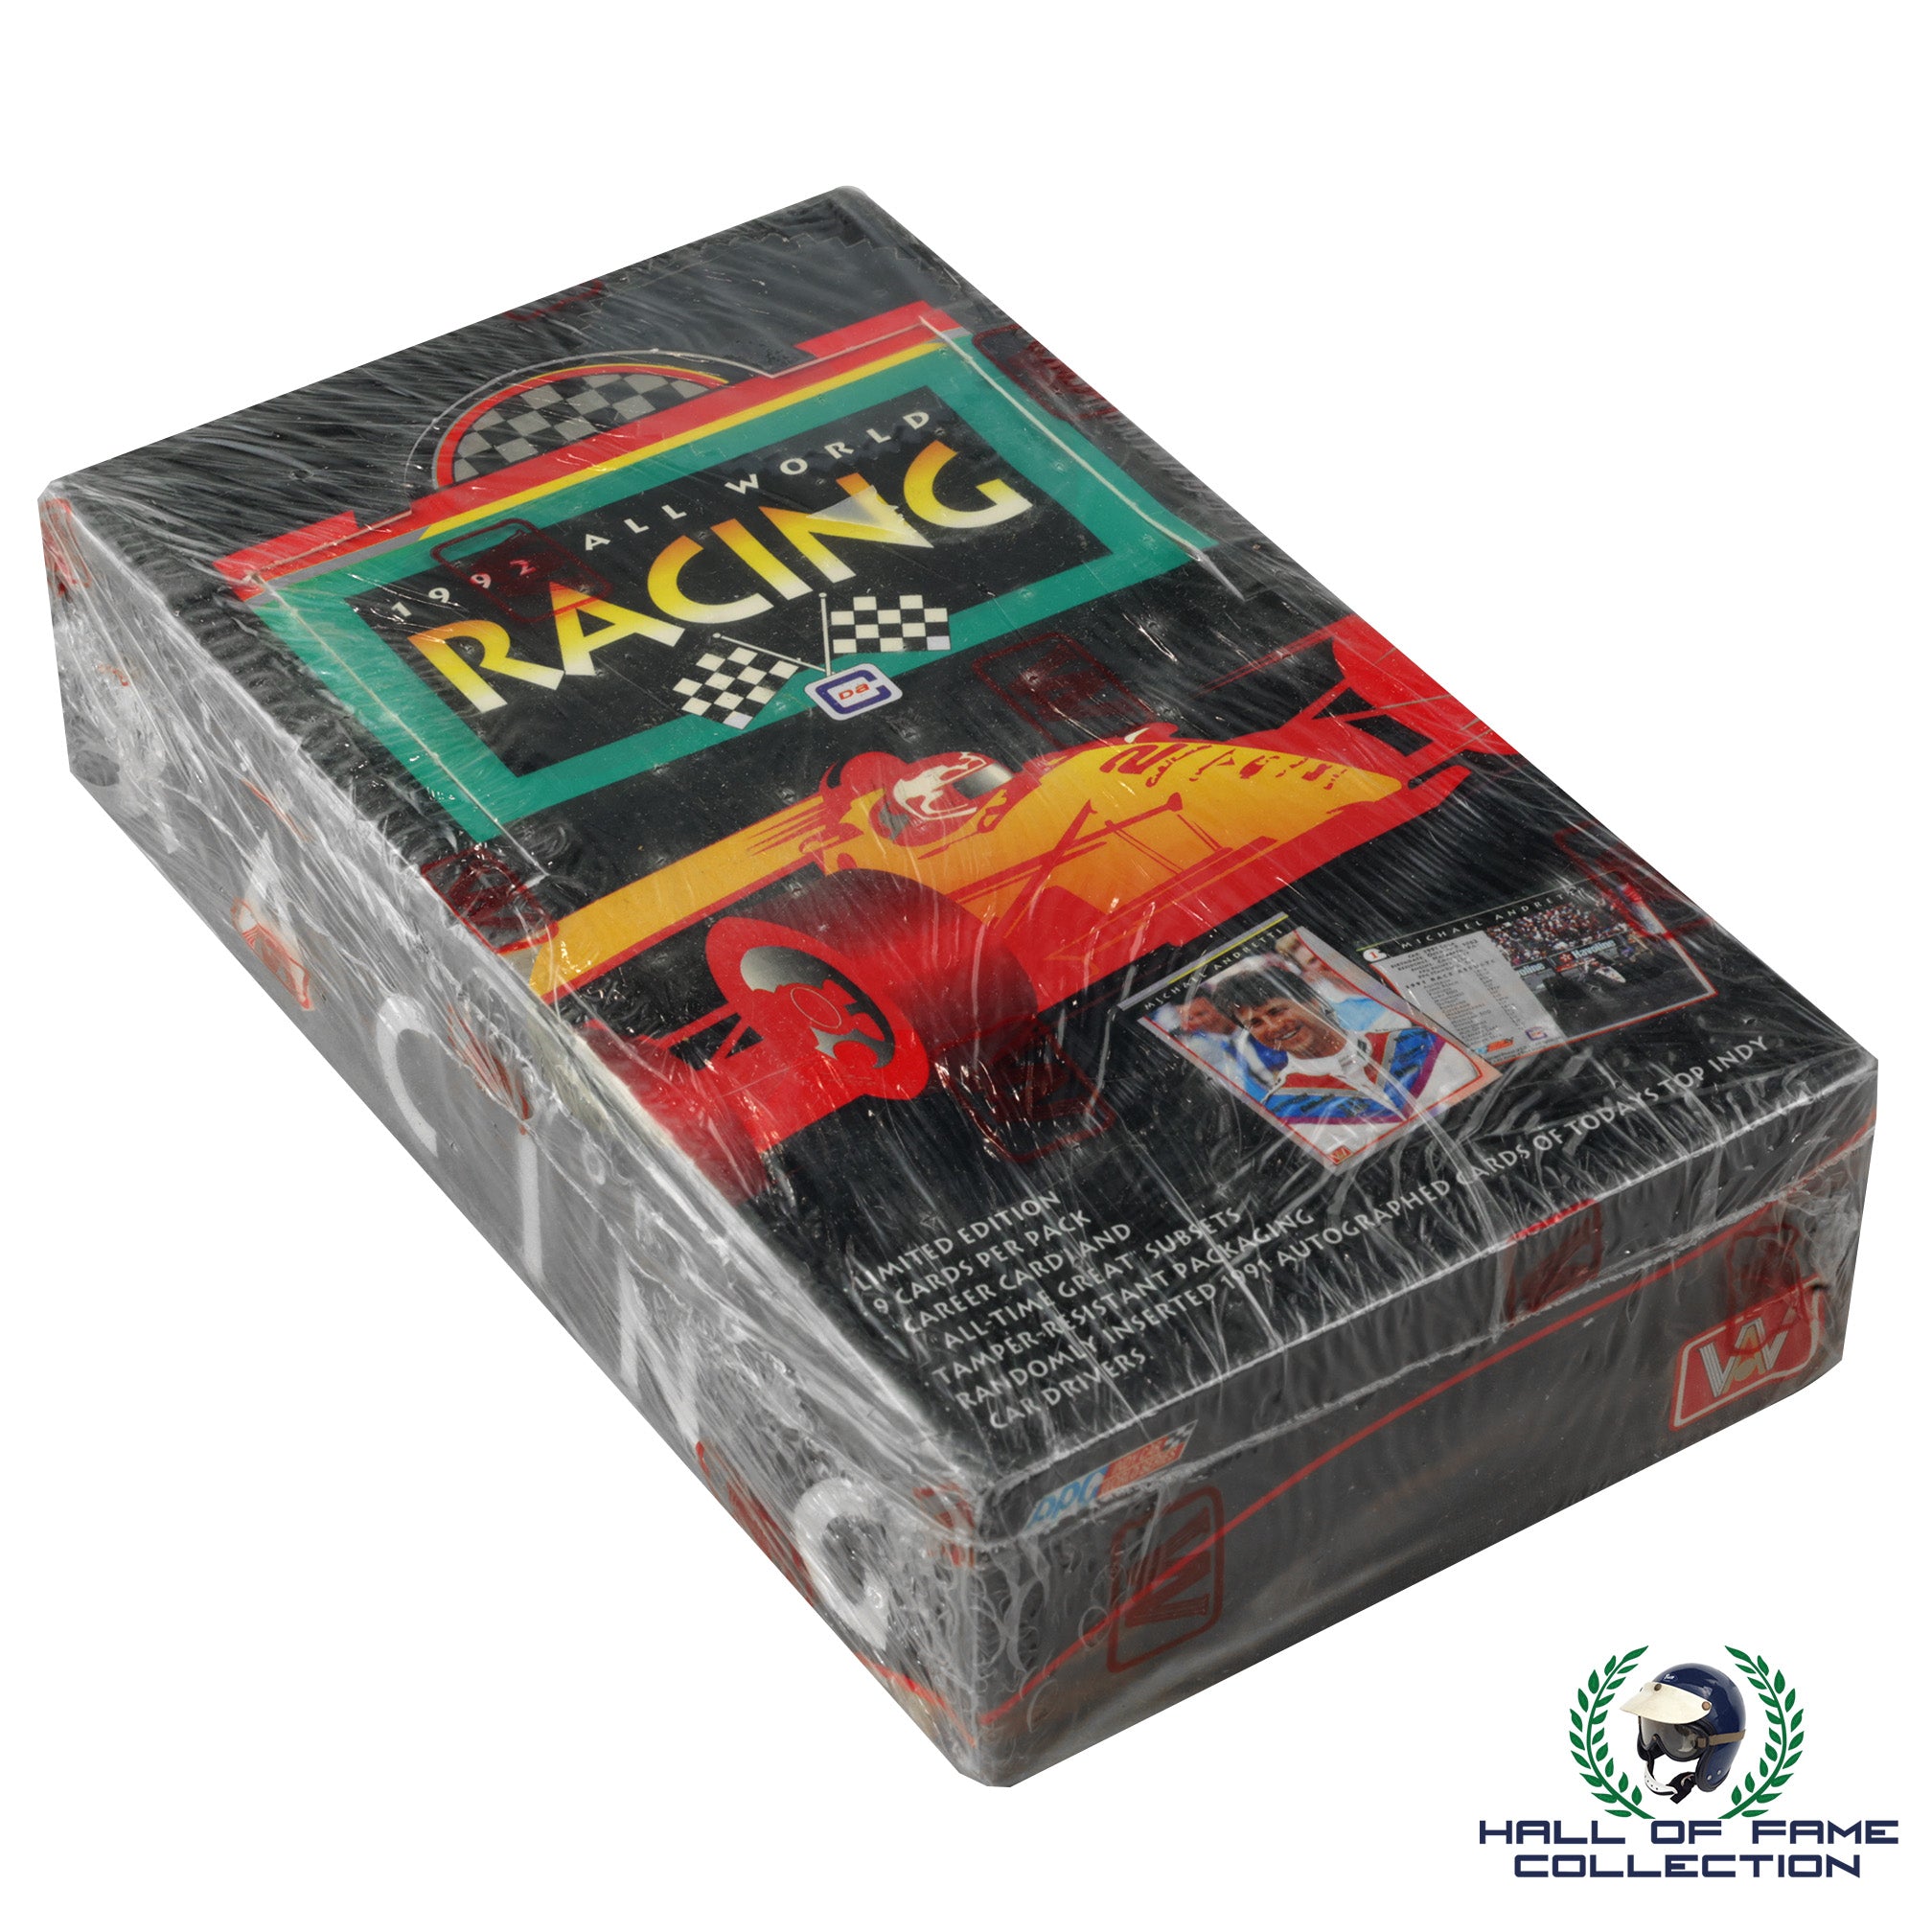 1992 IndyCar All World Racing 36 Pack Trading Card Wax Box